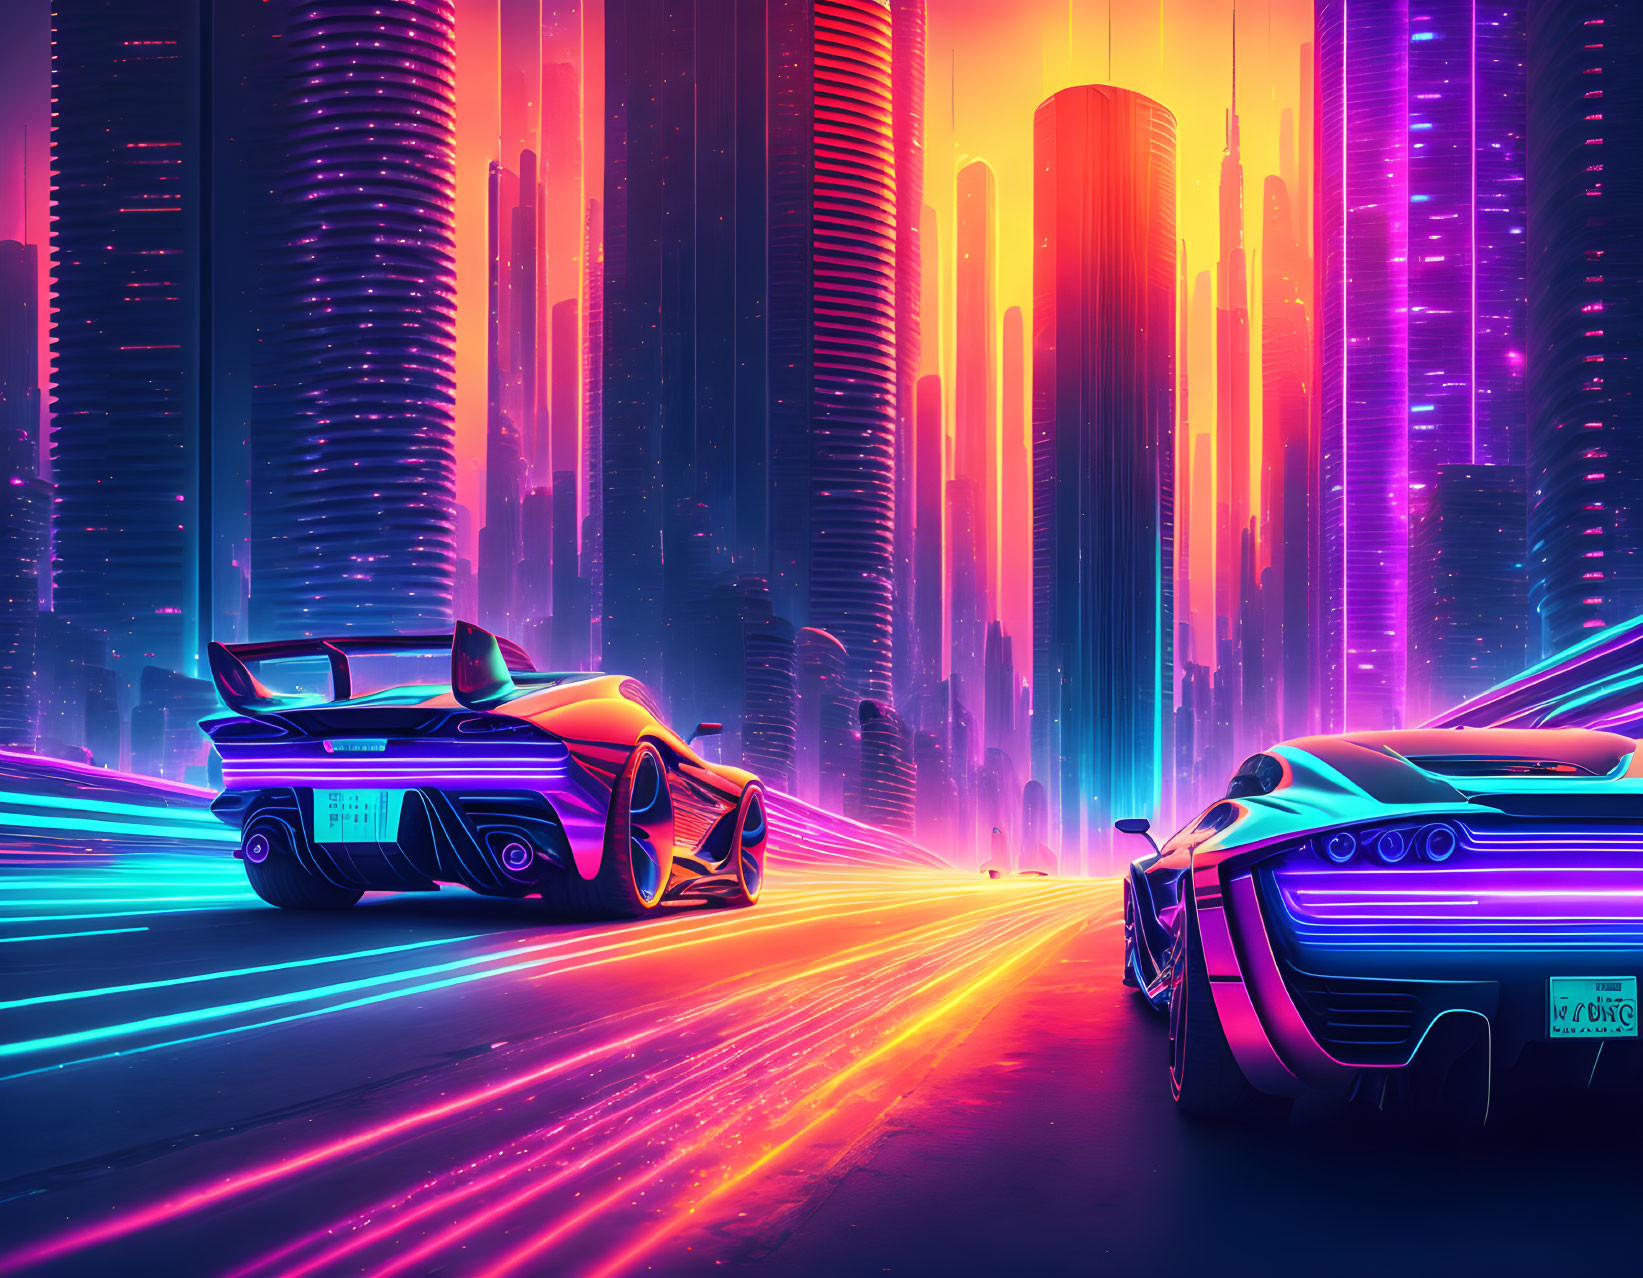 Futuristic neon-lit cityscape with sleek cars in cyberpunk setting